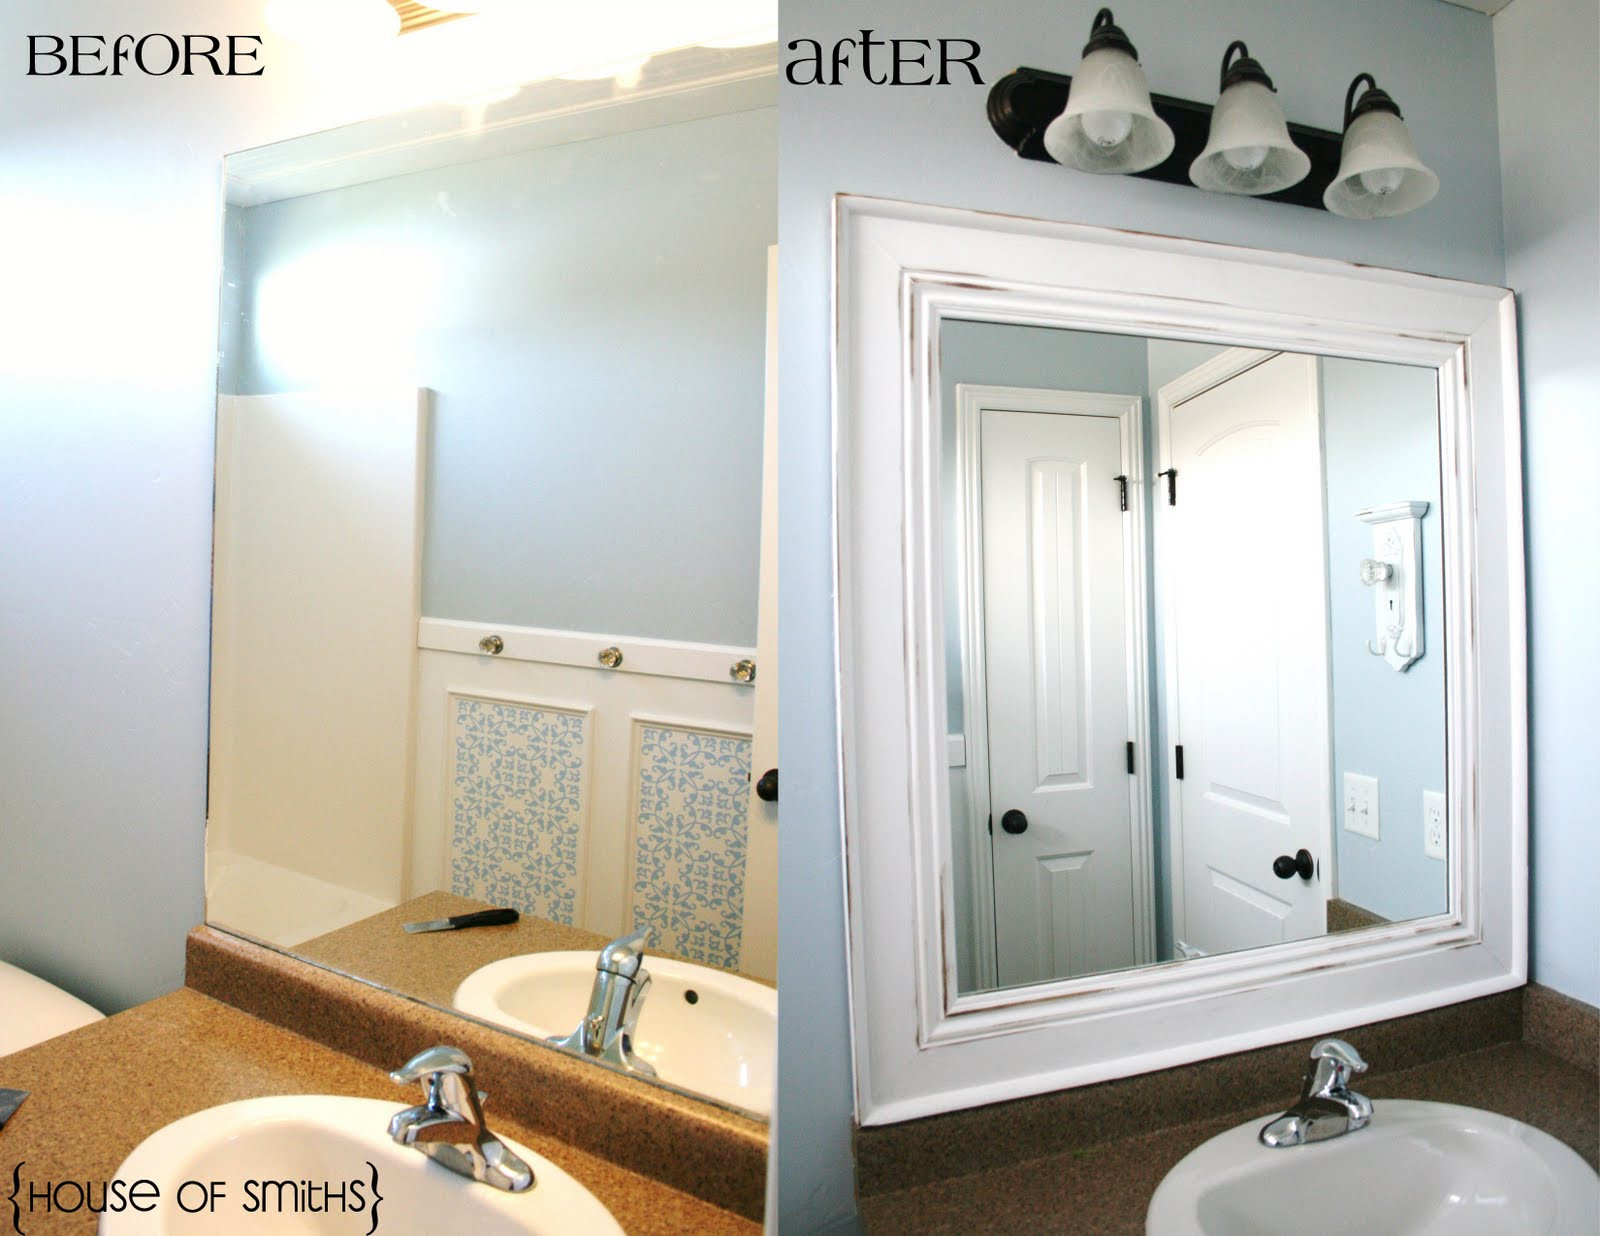 Best ideas about DIY Frame Bathroom Mirror
. Save or Pin DIY Framed Mirror Tutorial Now.